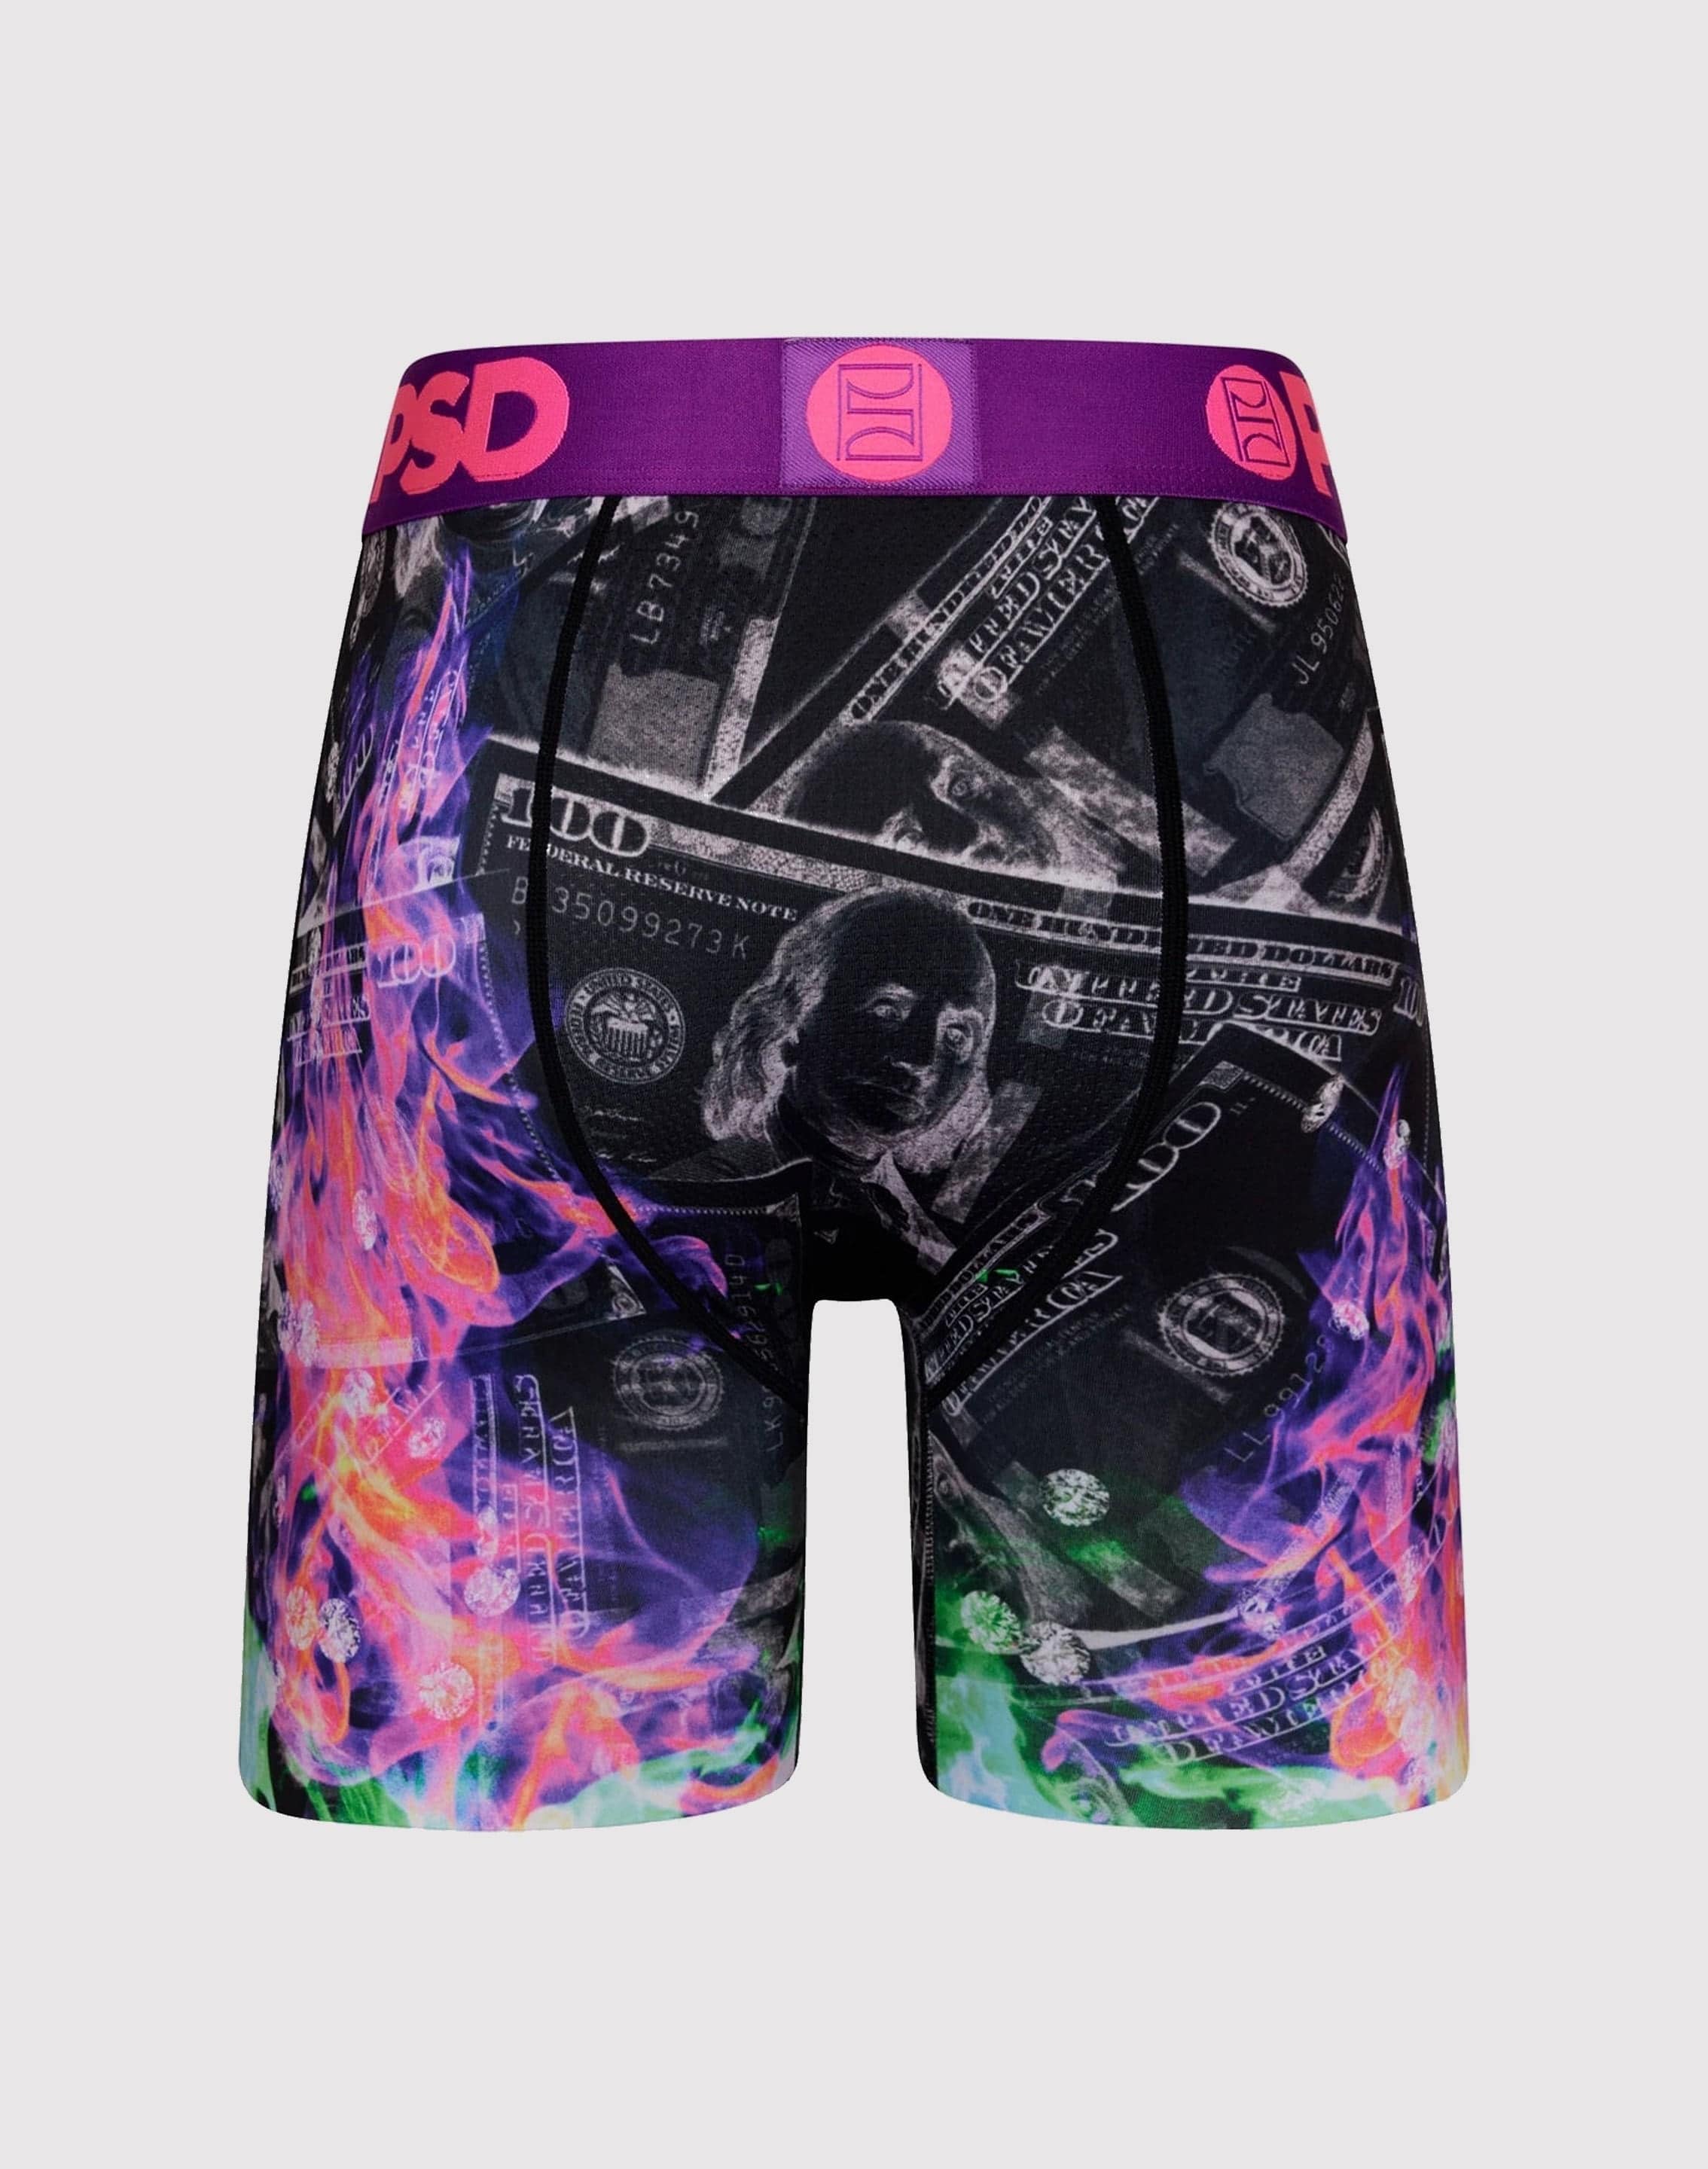 PSD Men's Multicolor Money Strike Boxer Briefs Underwear - 123180052-M —  WatchCo